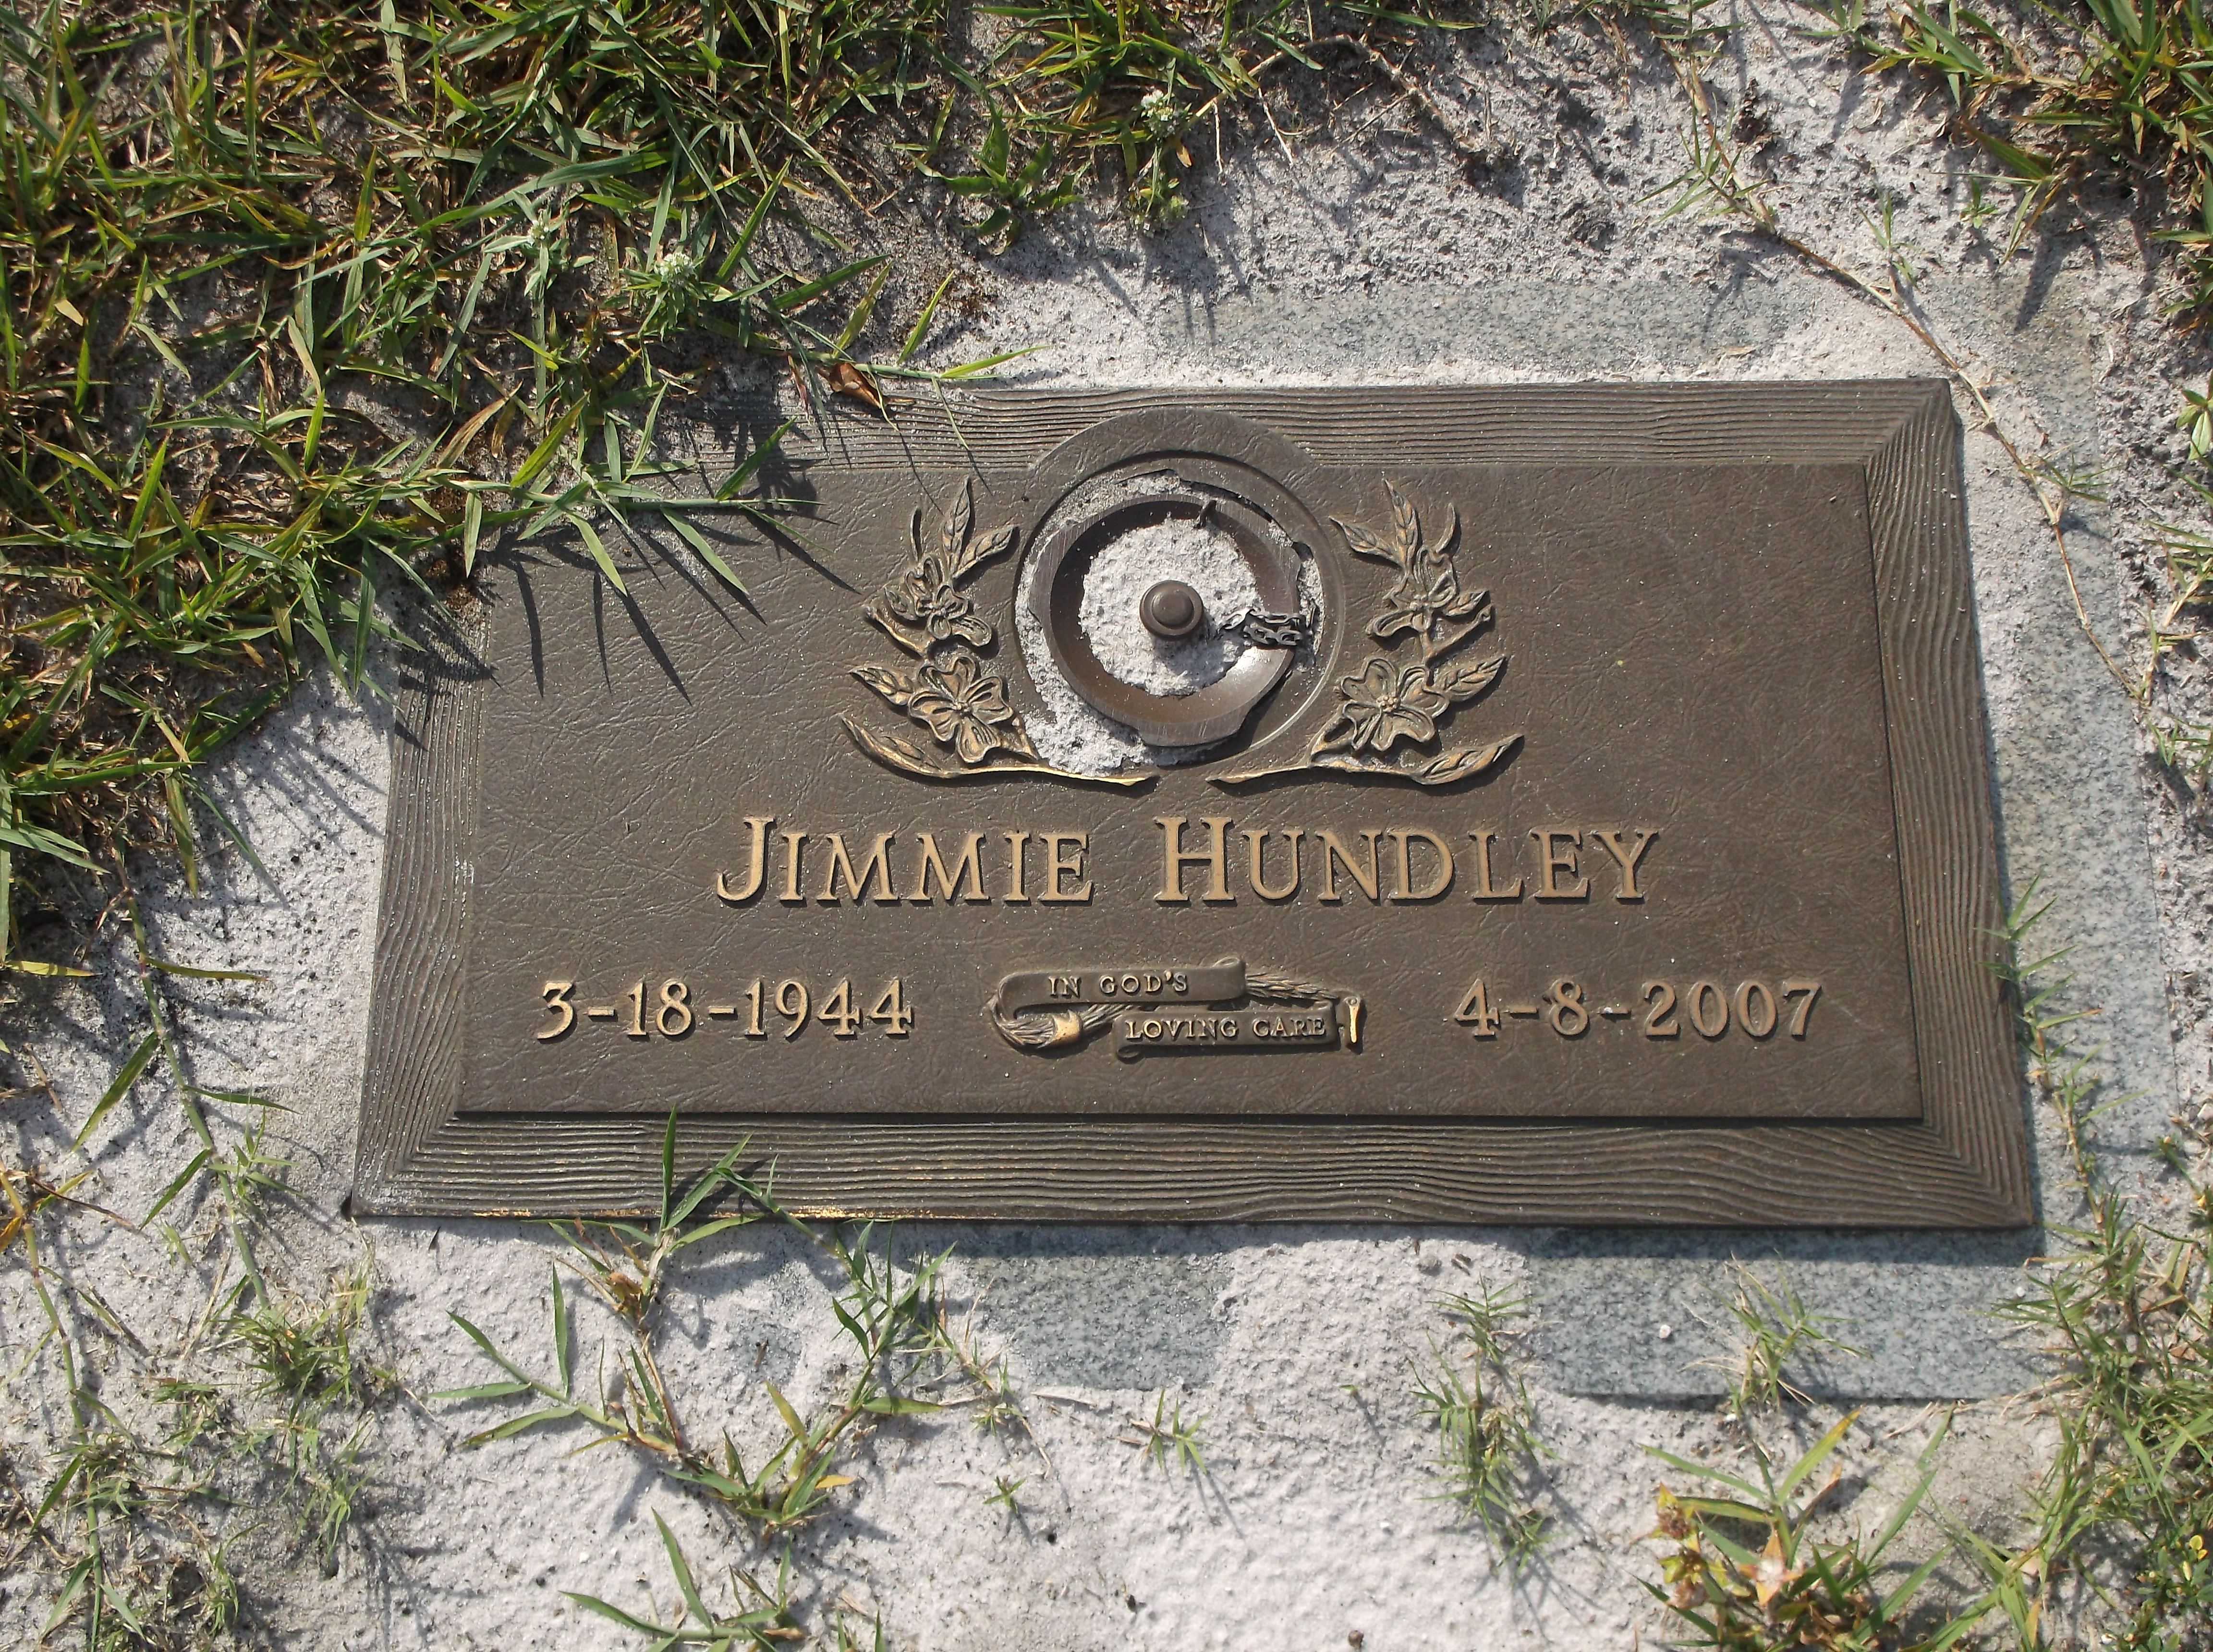 Jimmie Hundley